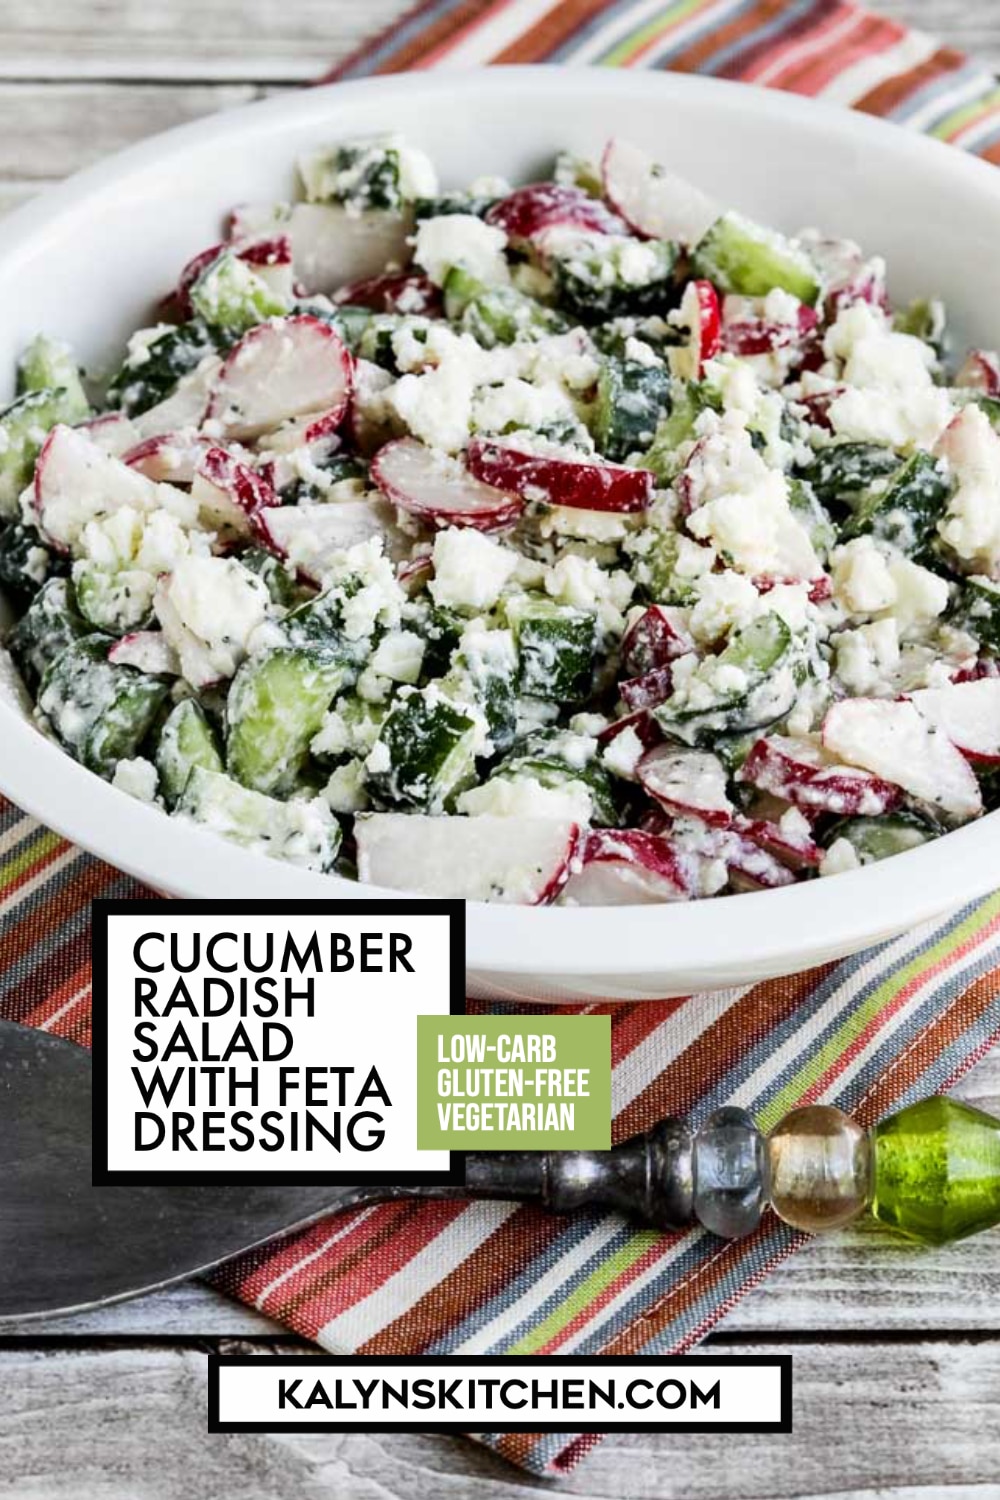 Pinterest photo of cucumber and radish salad with feta dressing